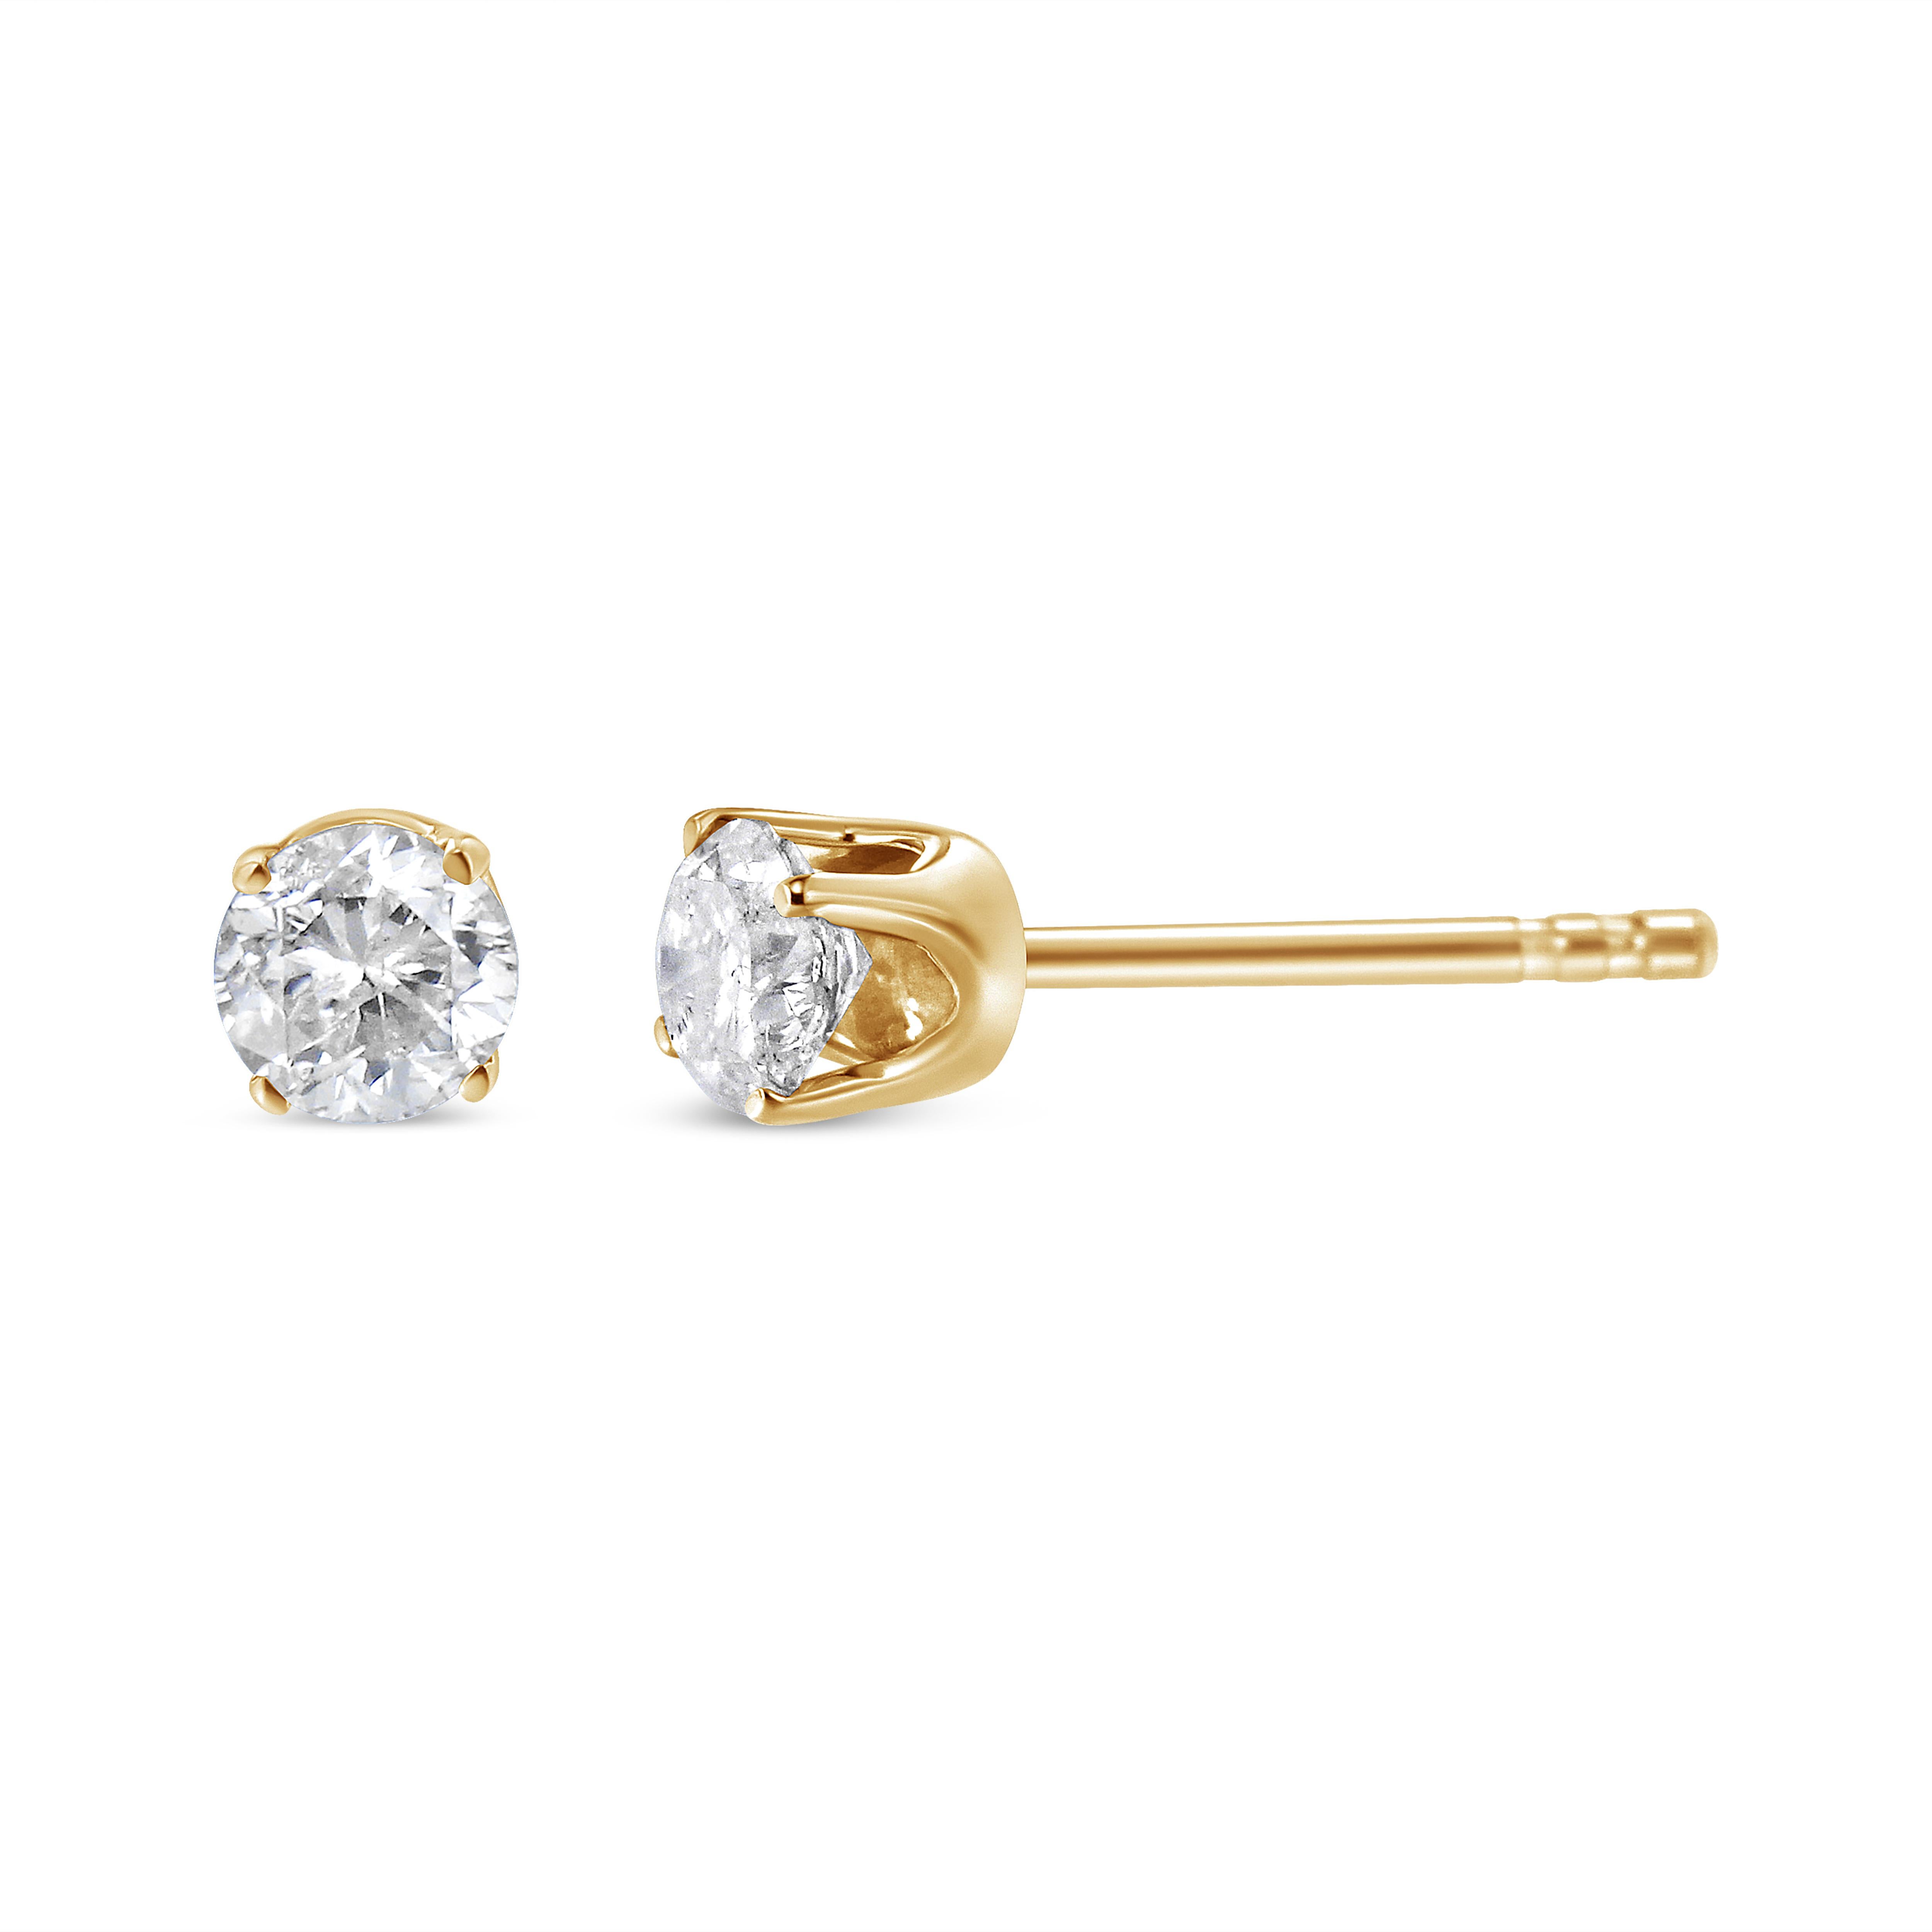 .30 carat diamond earrings